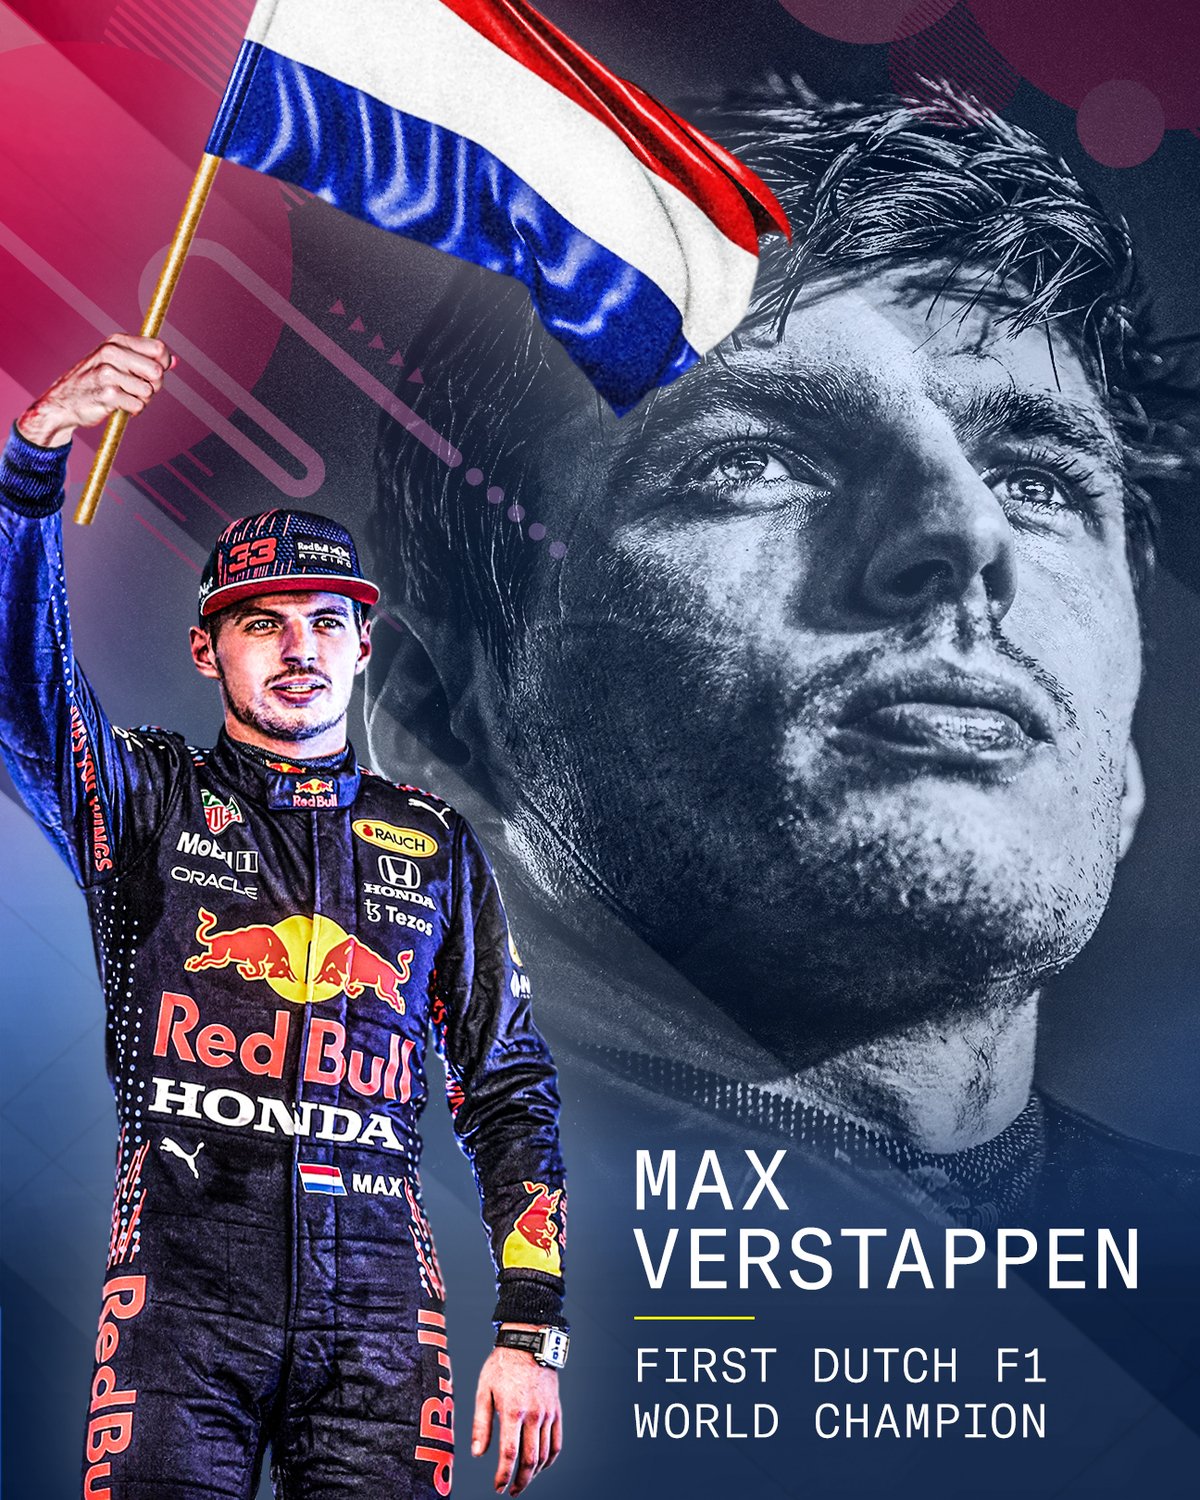 Max Verstappen F1 Championship 2021 wallpapers